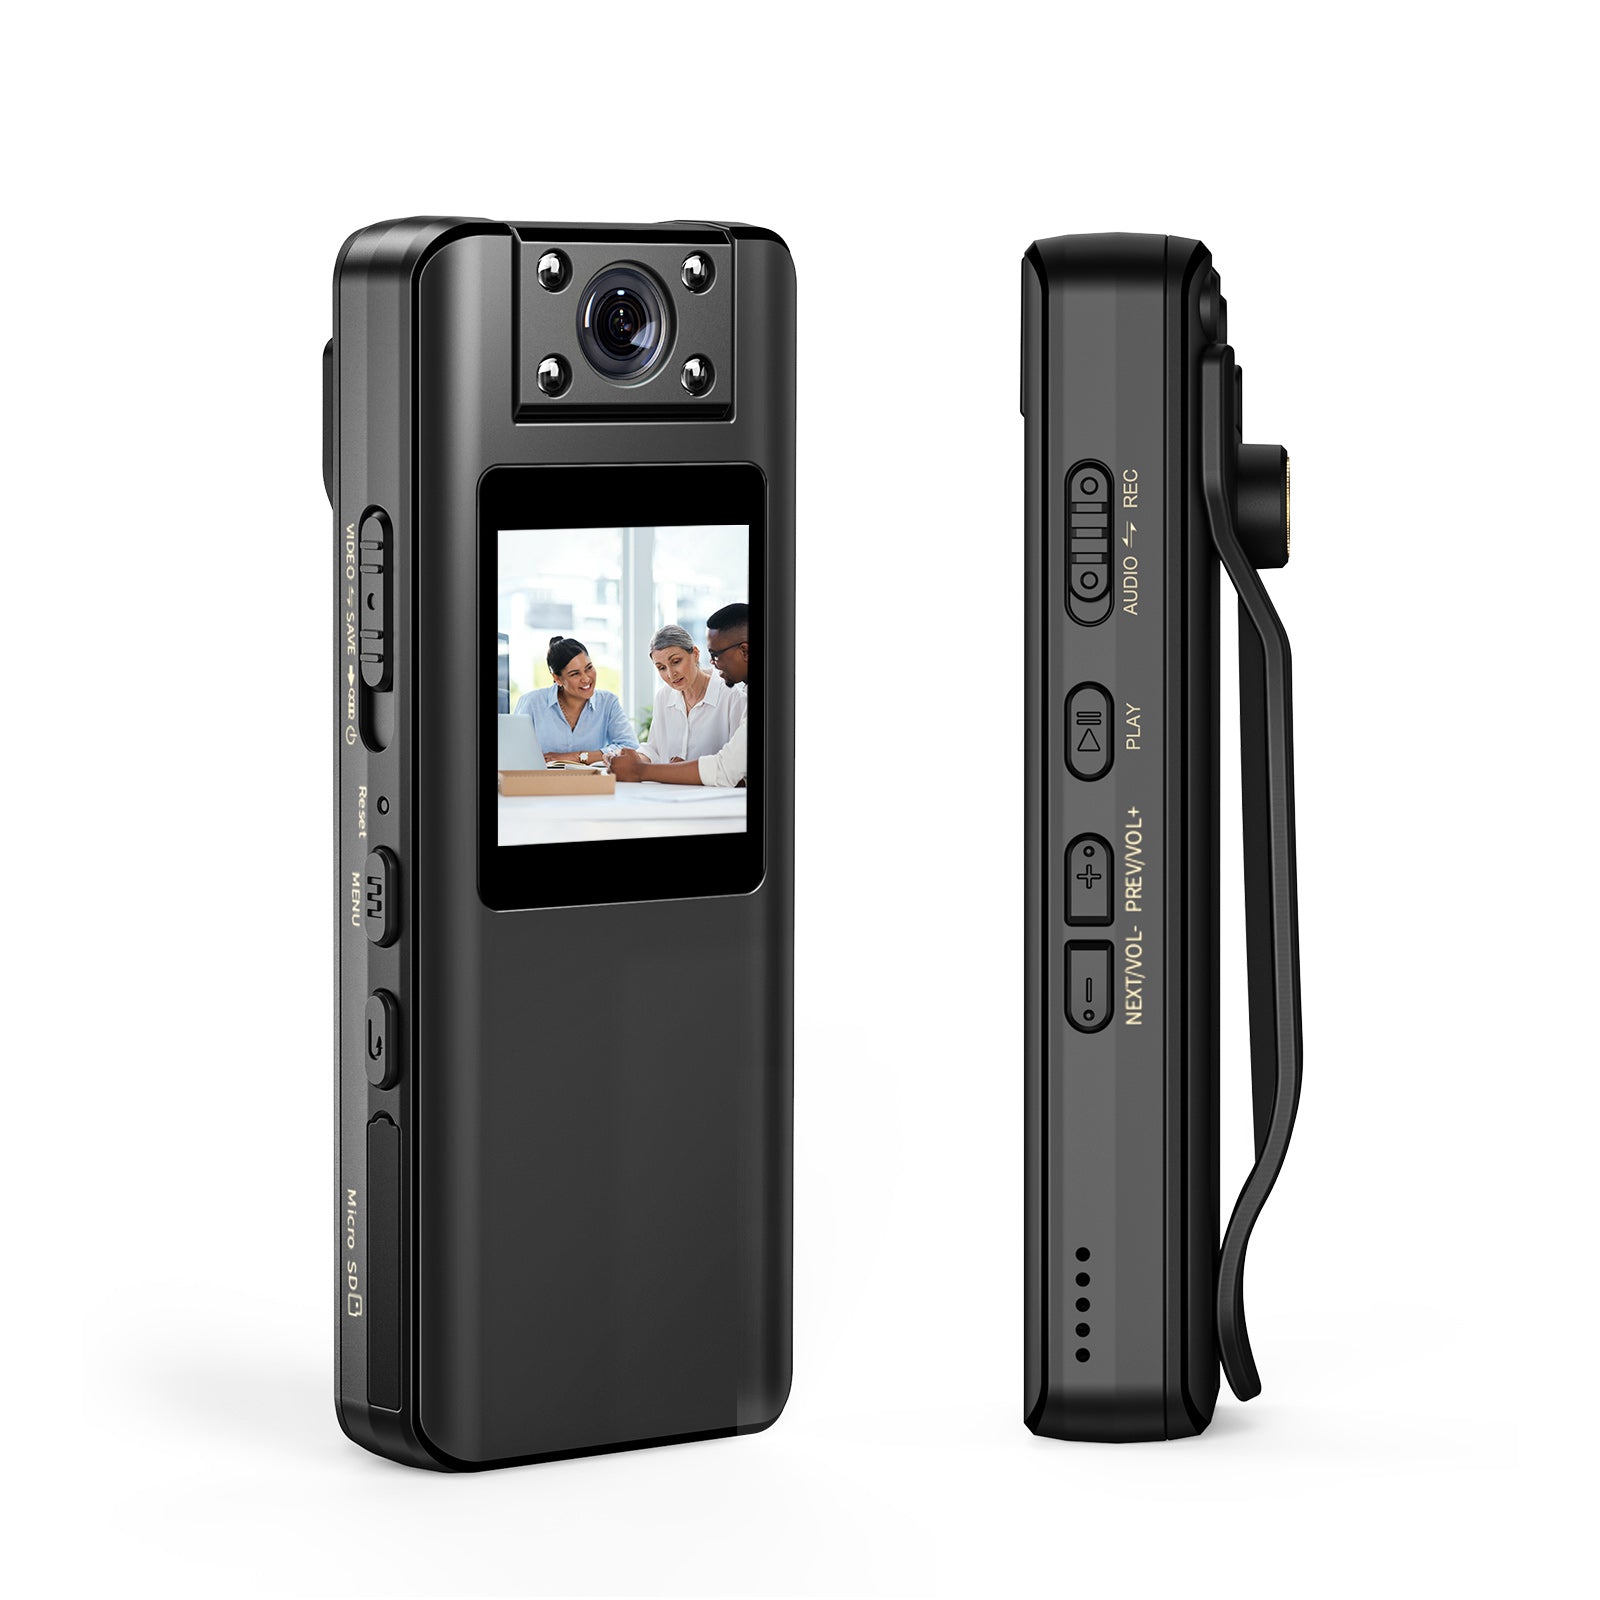 BOBLOV M5 – caméra corporelle 1440P, 64 go, enregistreur de Police,  batterie 4200MAH, caméra poitrine, étanche IP67, Mini caméra corporelle -  AliExpress